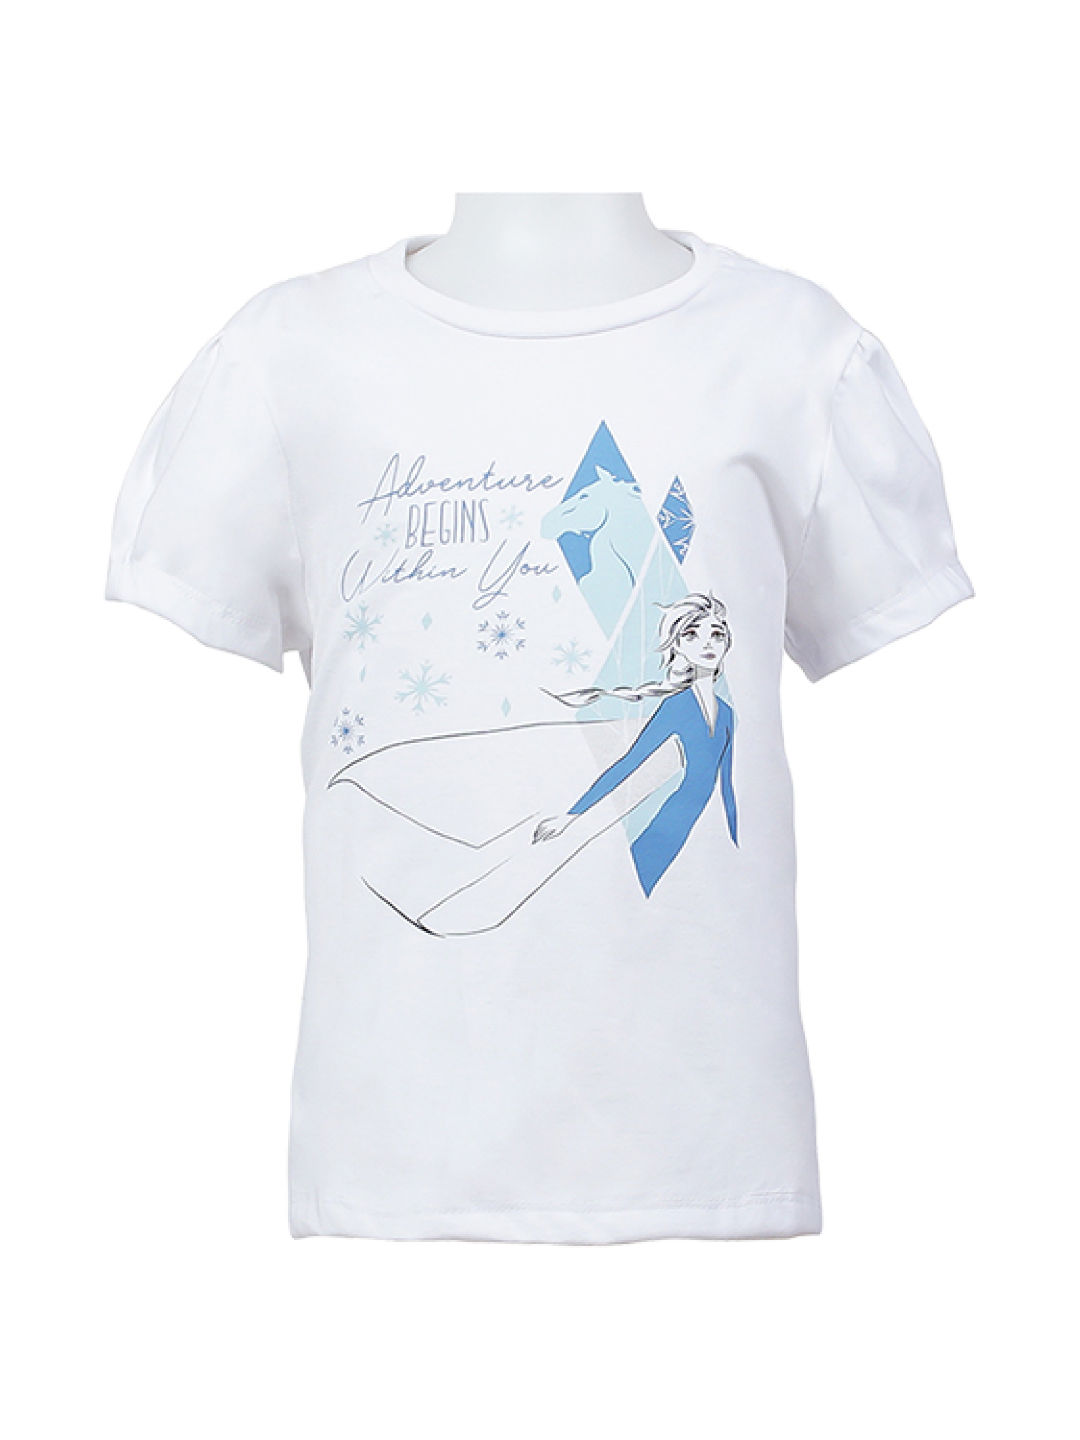 INSPI Disney Frozen Adventure Begins Tshirt (White- Image 1)